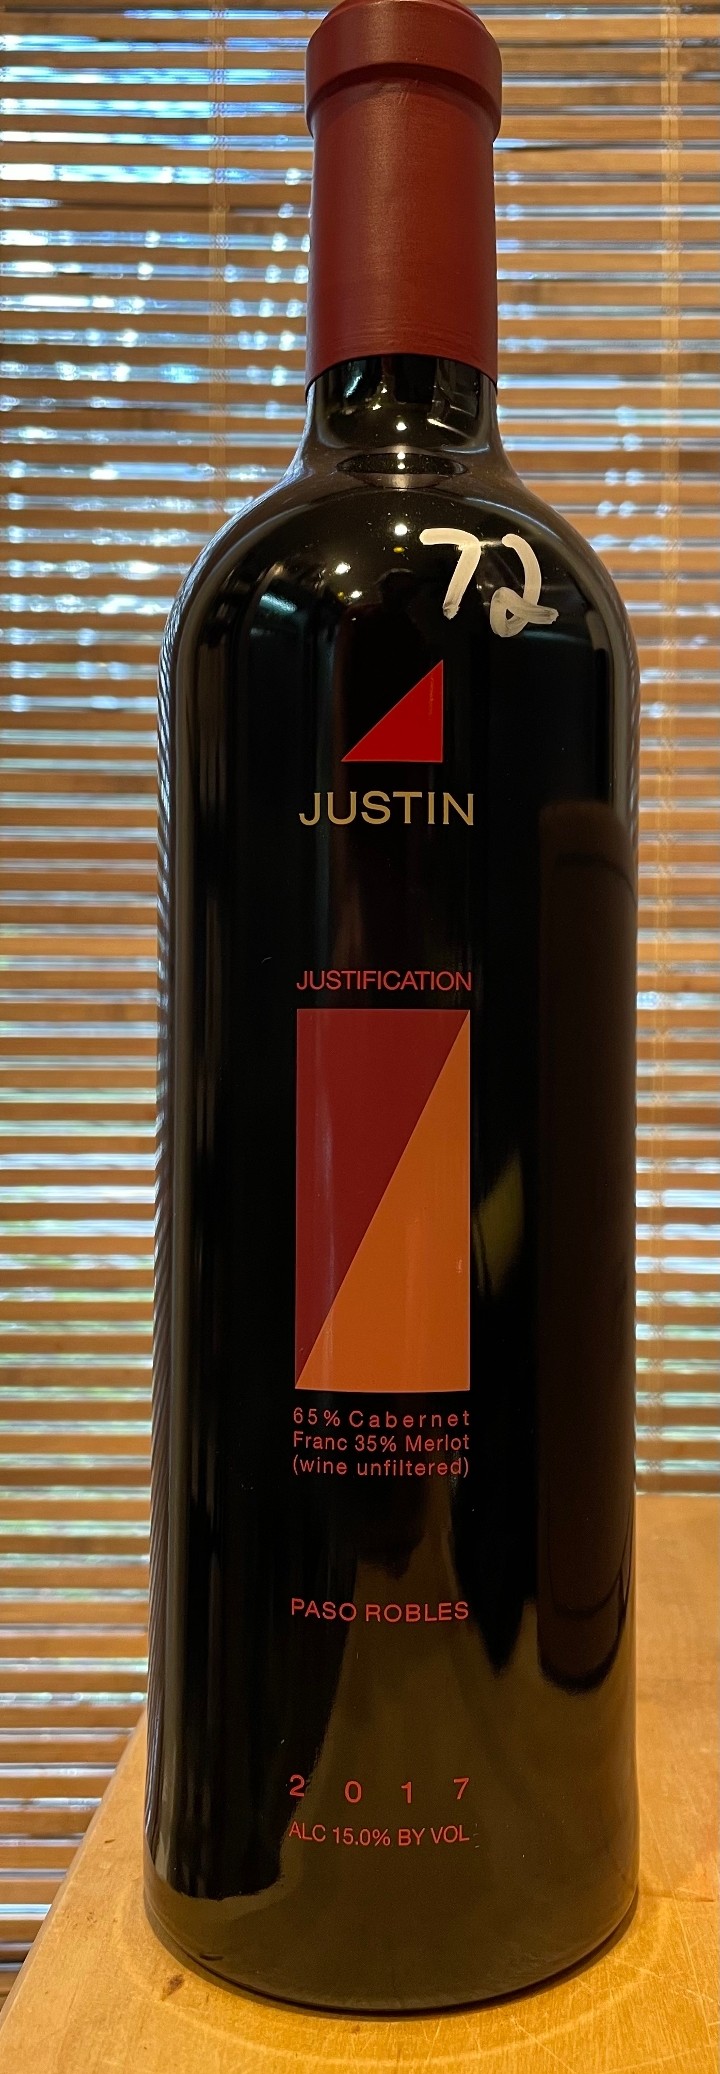 Justin "Justification" 2017 Cab Franc